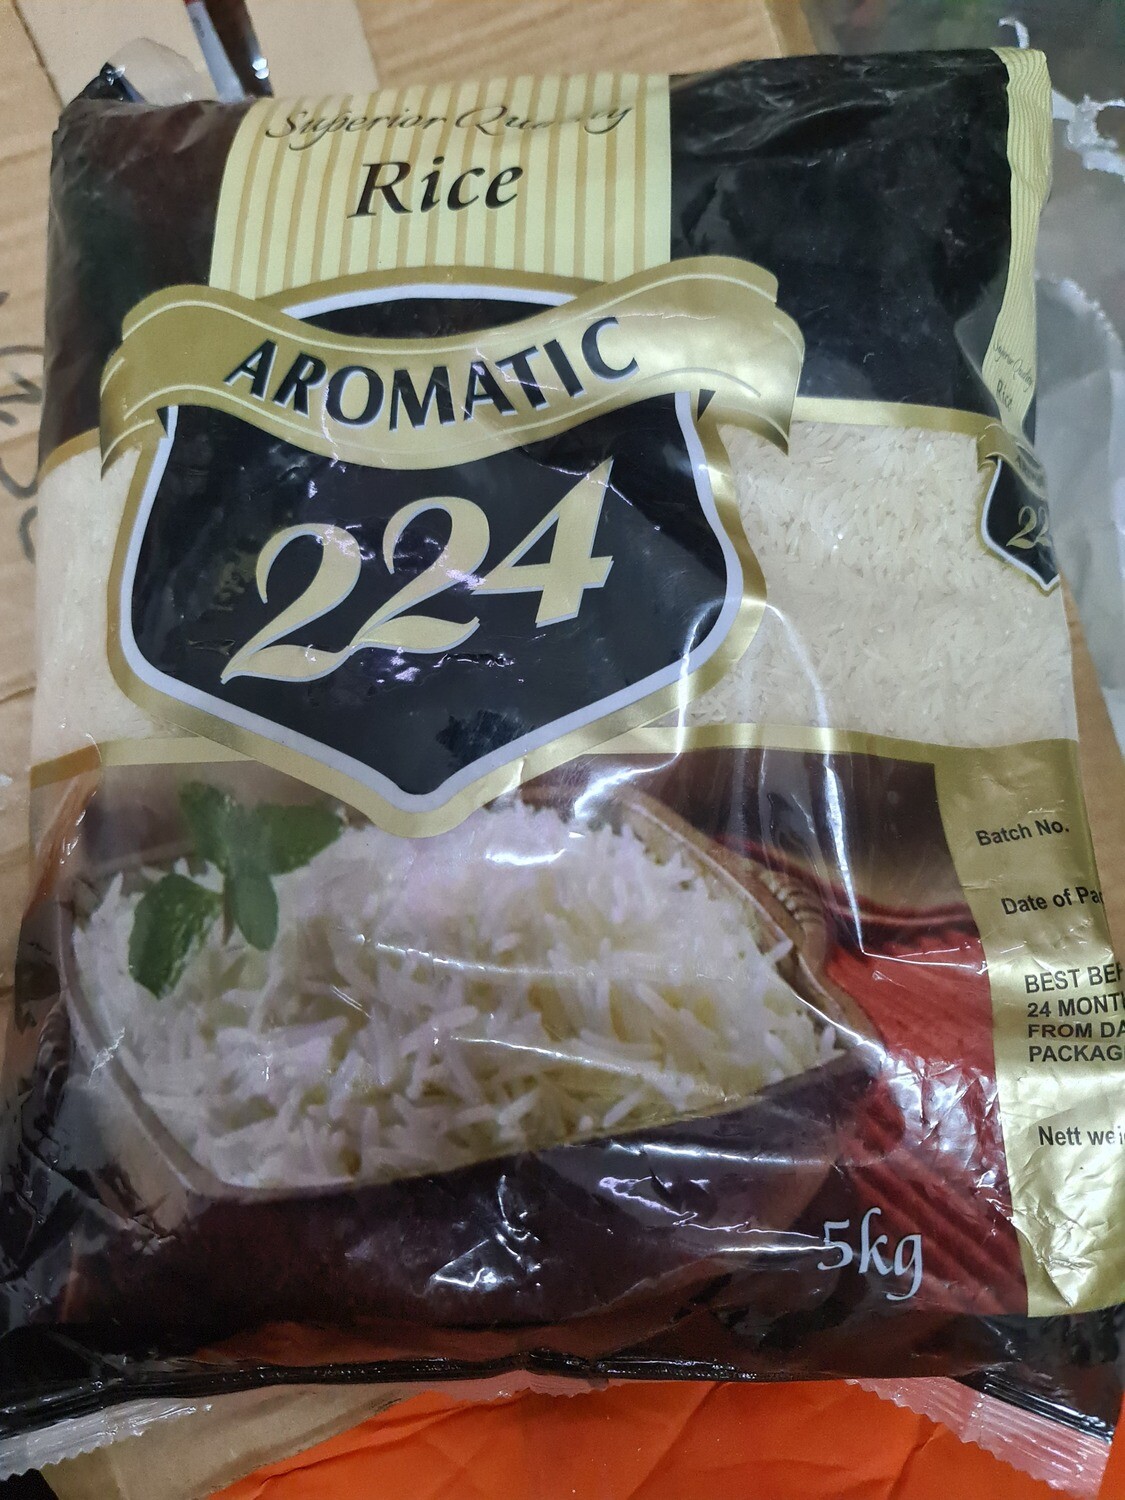 224 aromatic rice 2KG. BOGOF OFFER